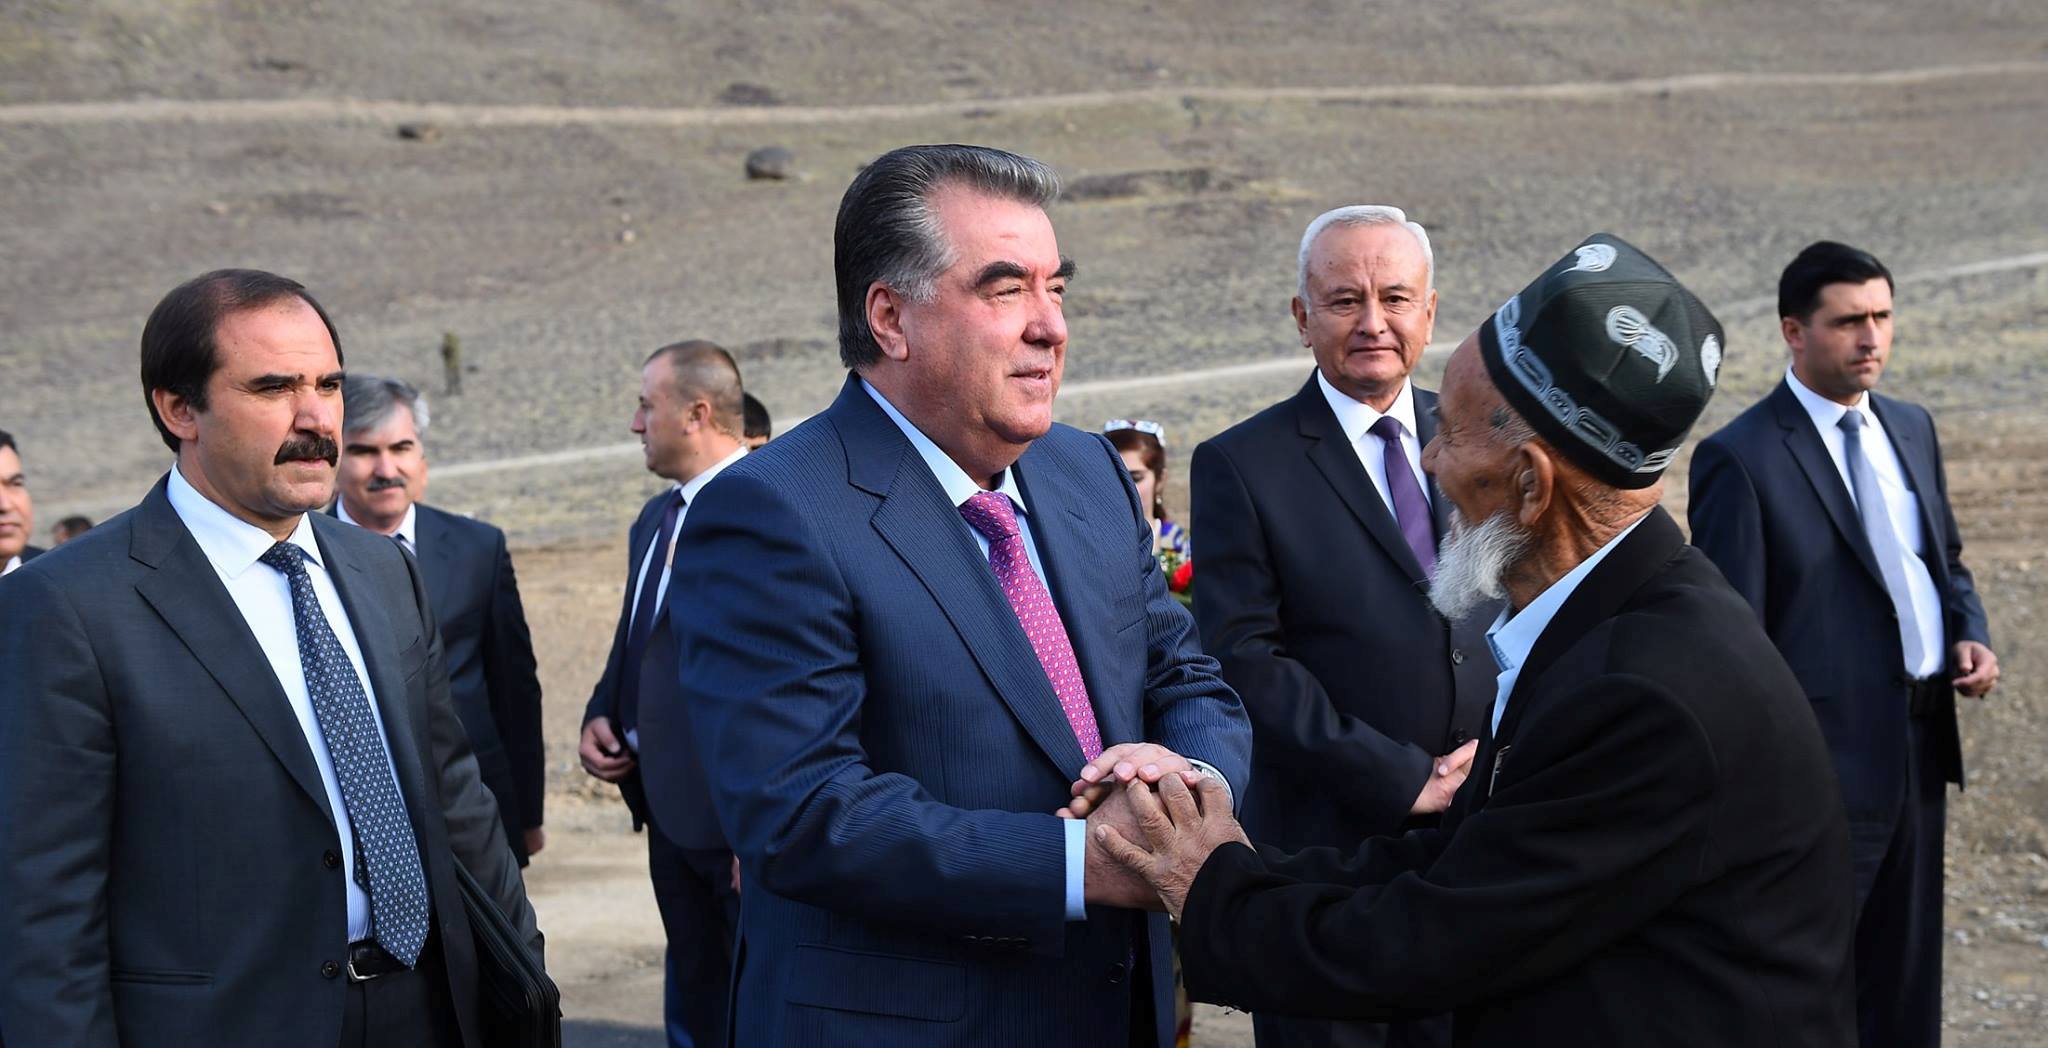 Зафаробод точикистон. Эмомали Рахмон. Эмомали Рахмон 1998. Охрана президента Таджикистана Эмомали Рахмон.